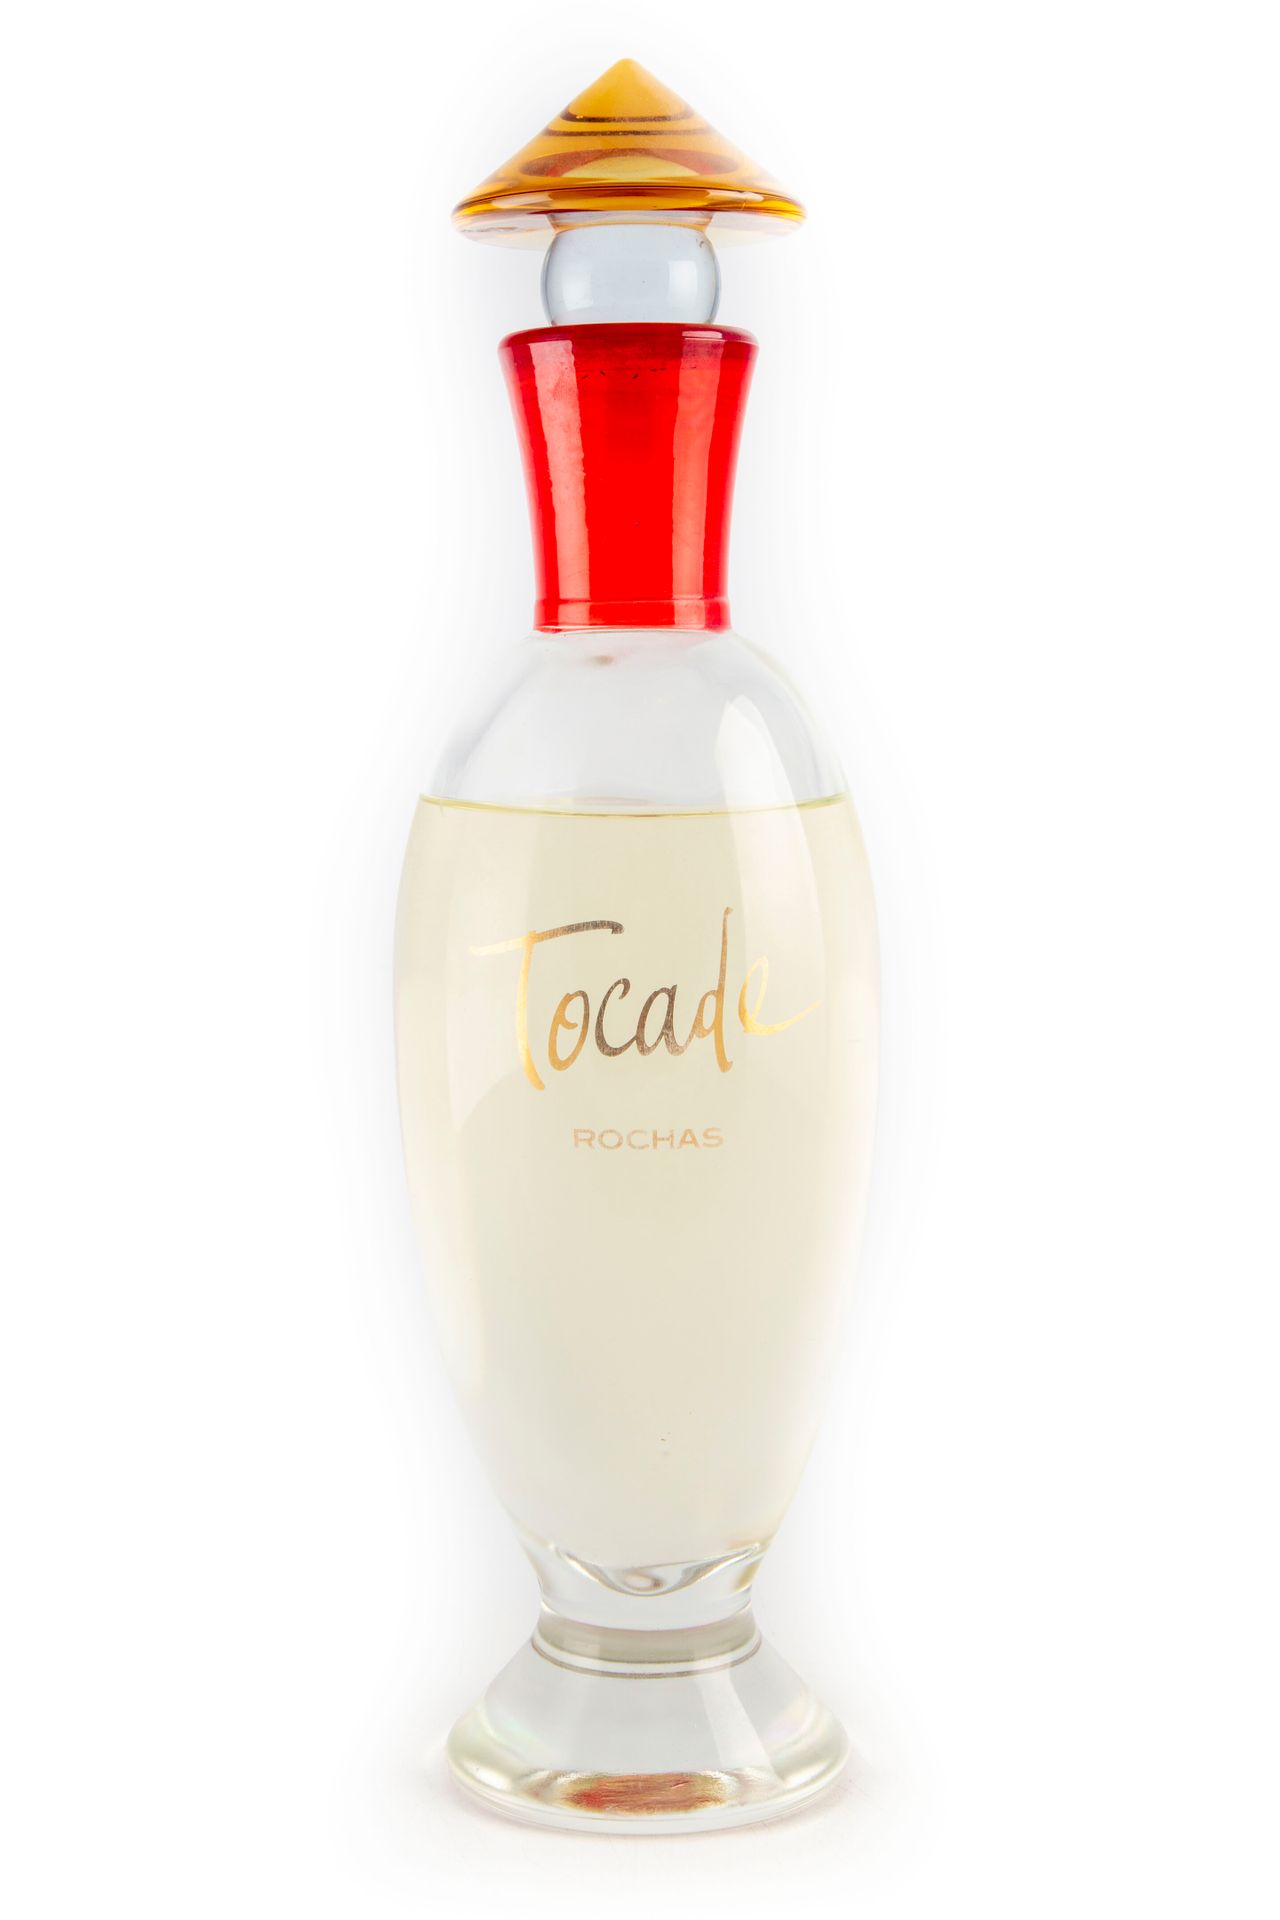 Null ROCHAS

Tocade "香水瓶，假的

H.41厘米